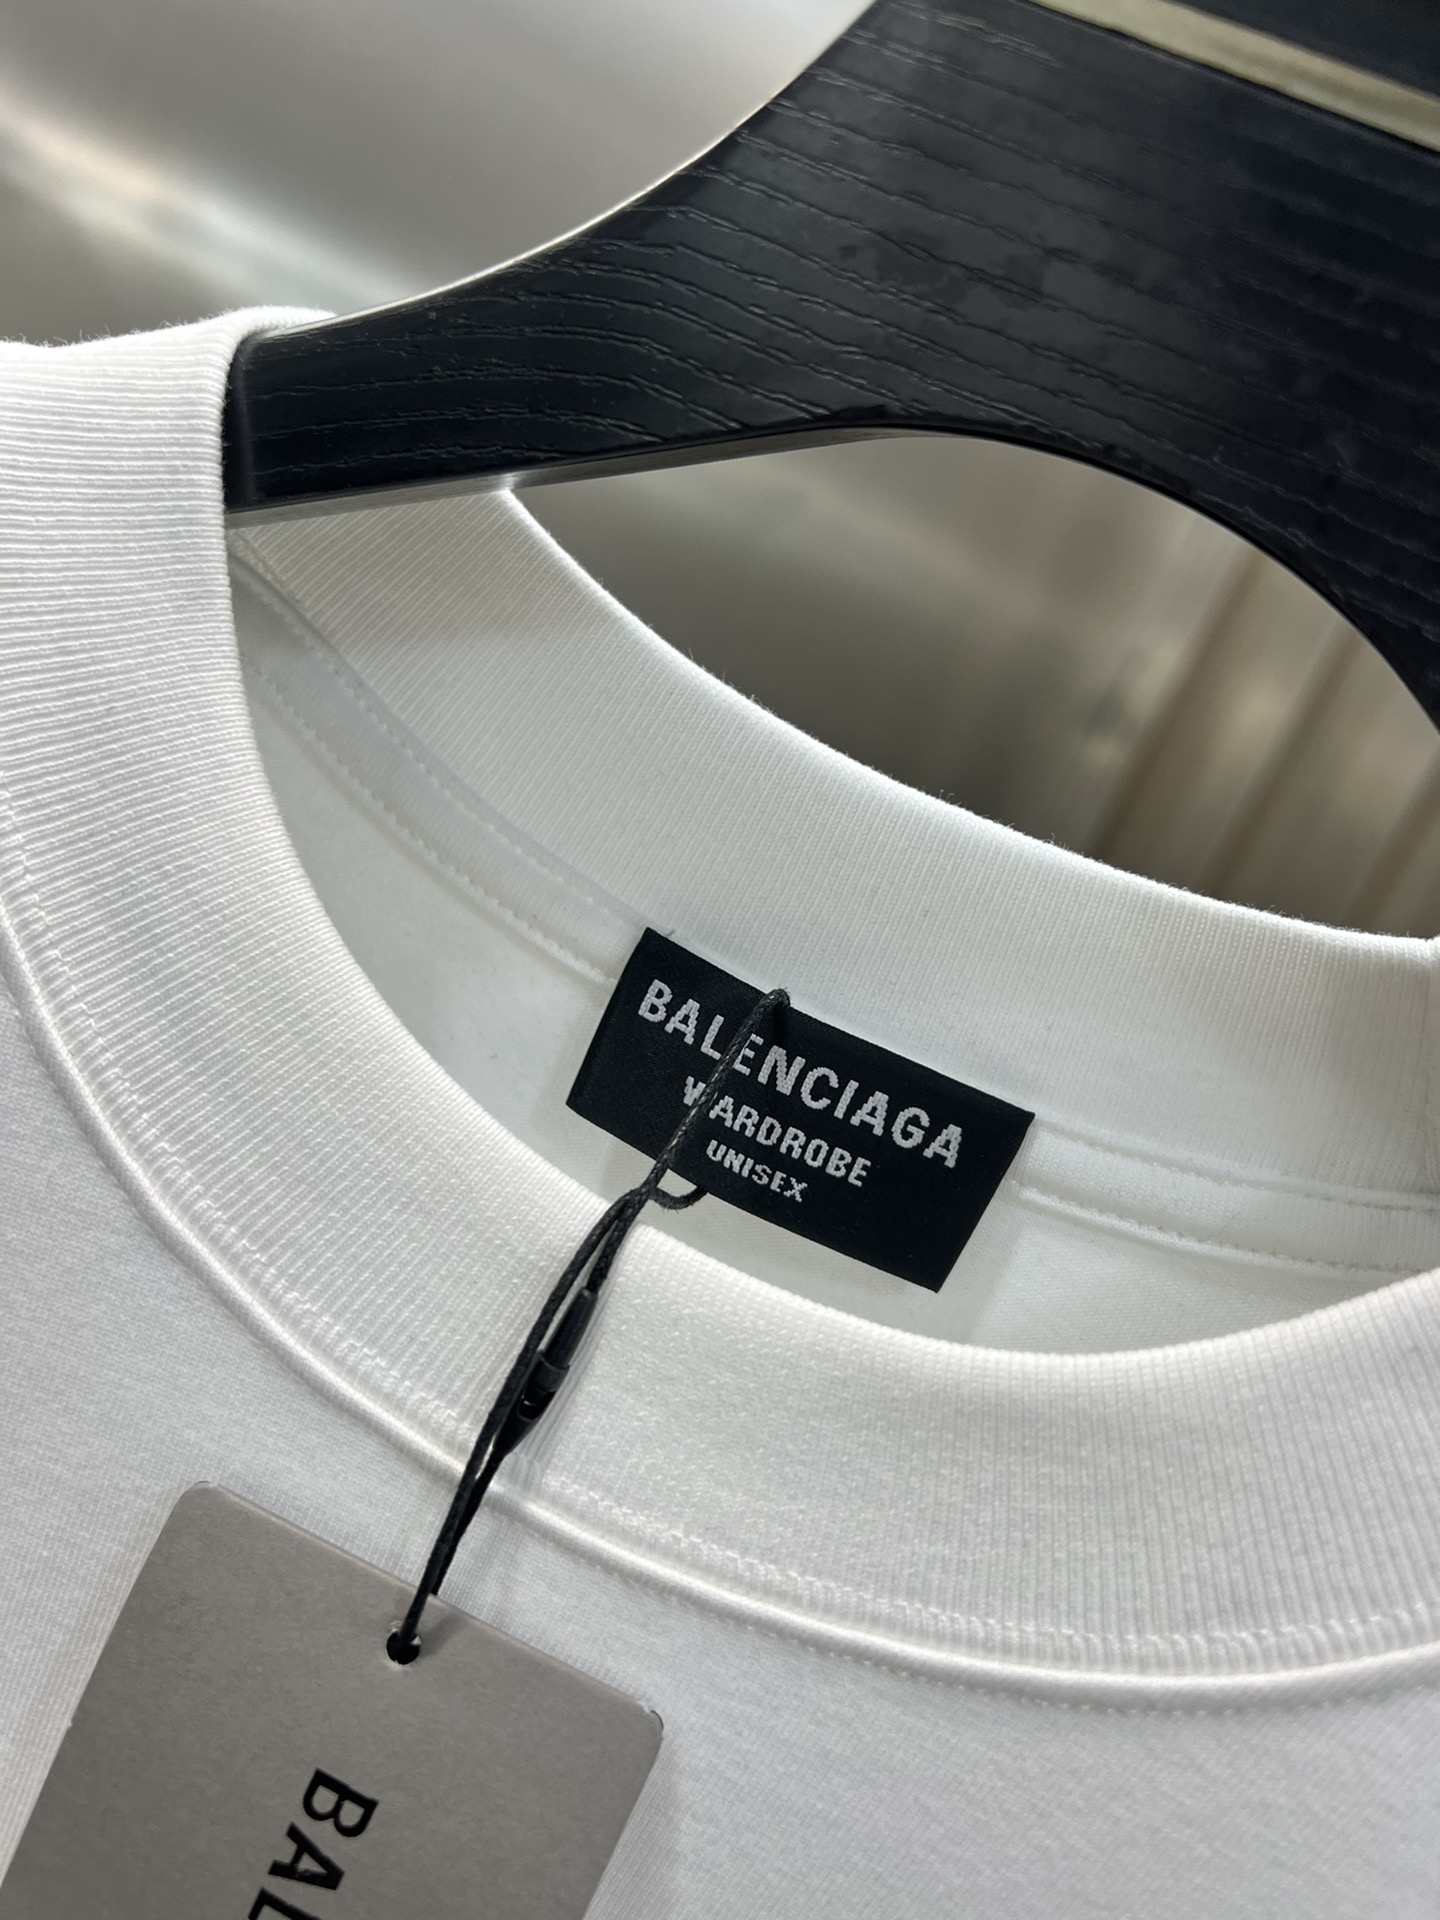 NEW圧倒的 新作バレンシアガ tシャツ メルカリn級品_3